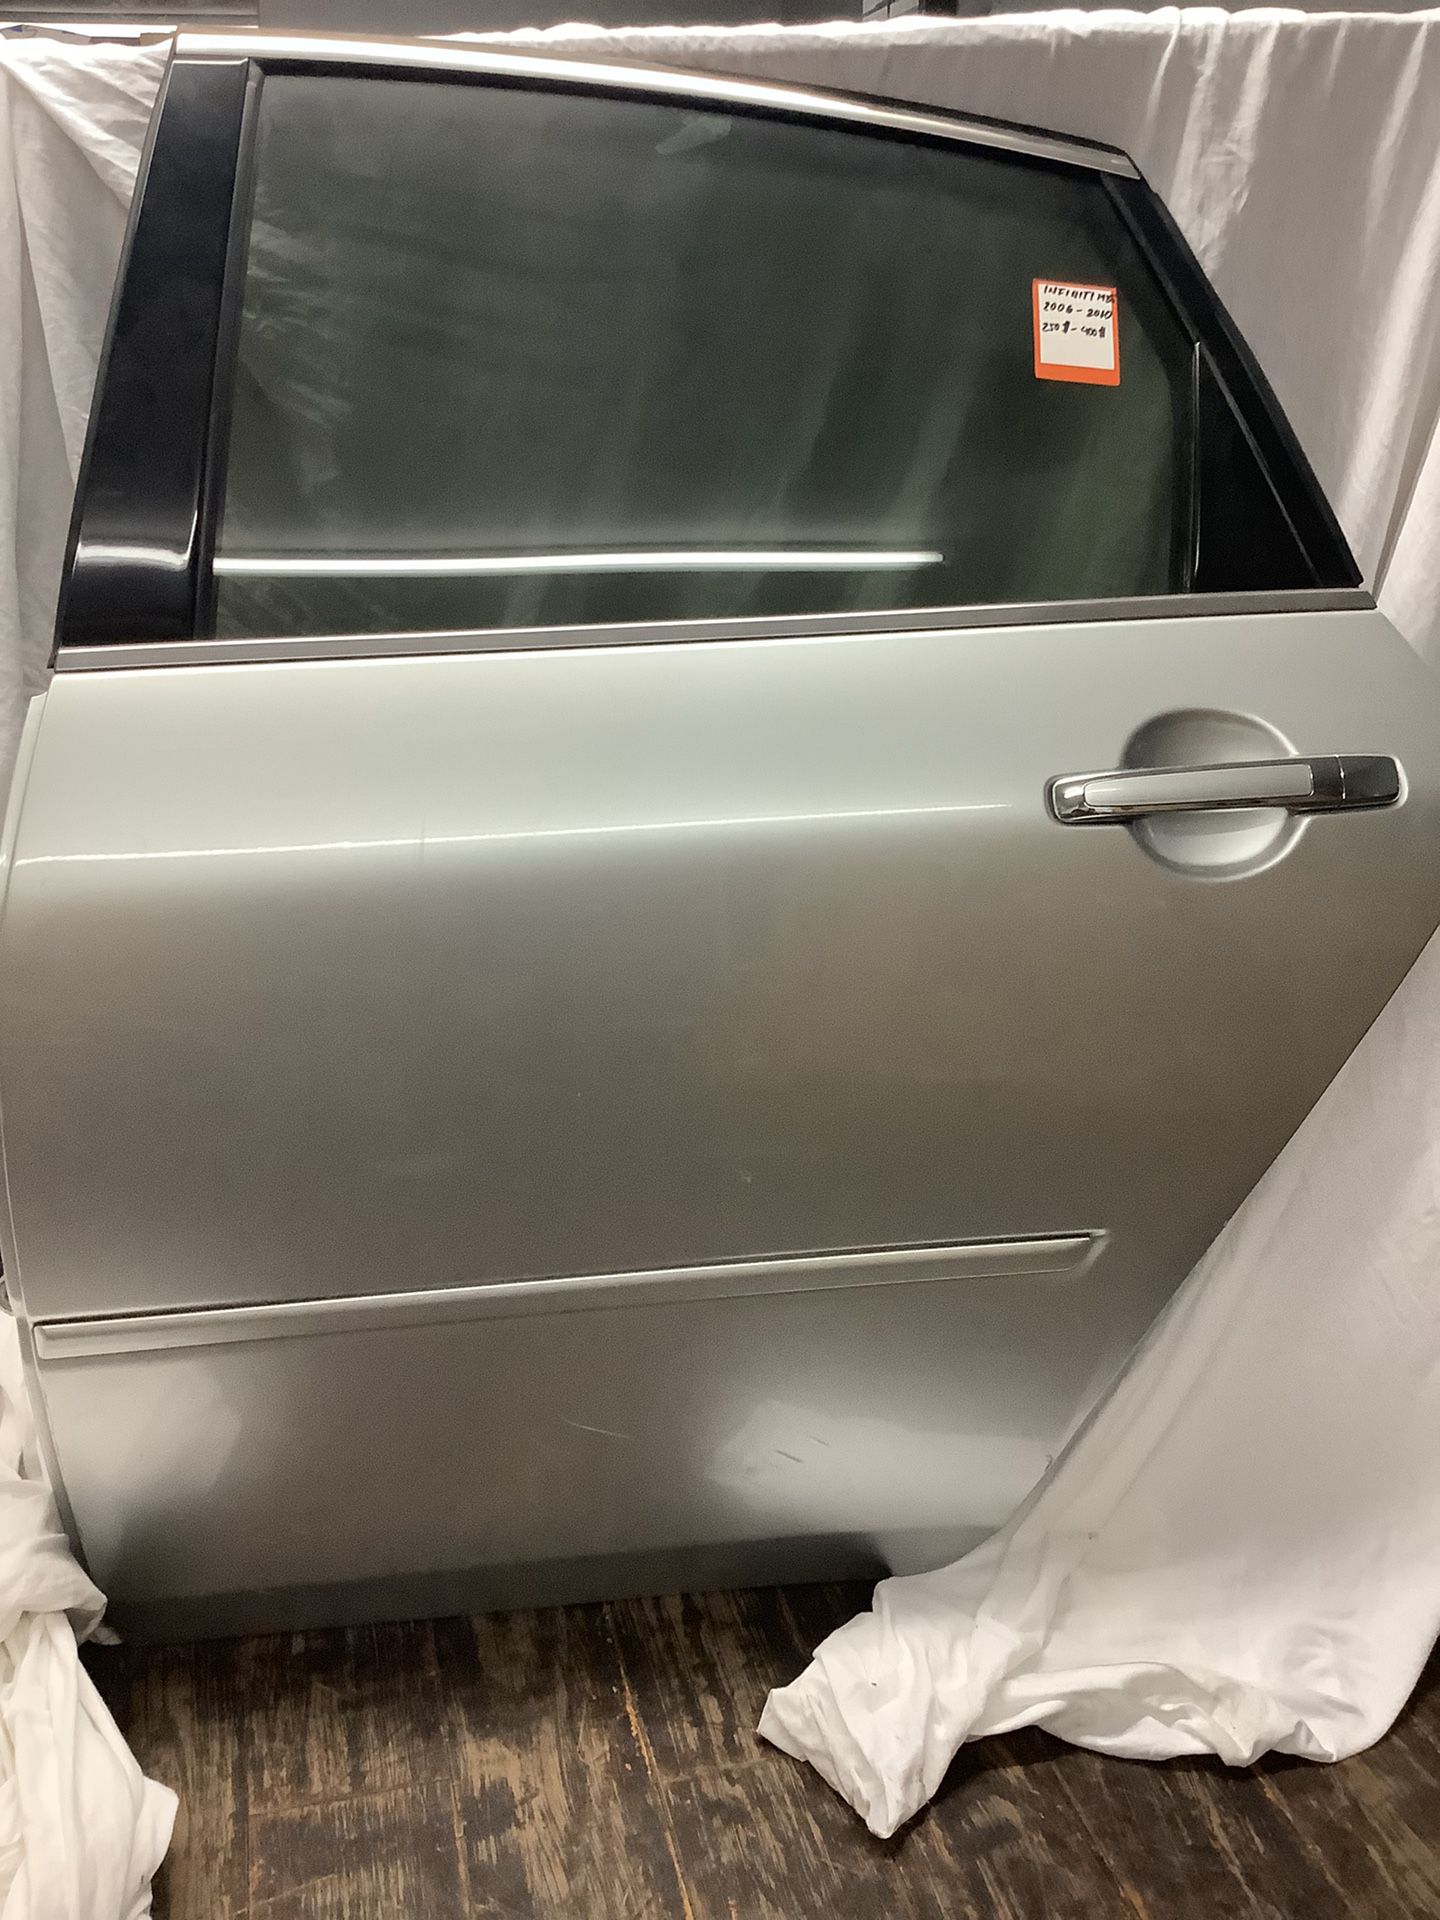 2006-2010 Silver Infiniti M35 Left Rear Door For Sale! $199 Good Condition 